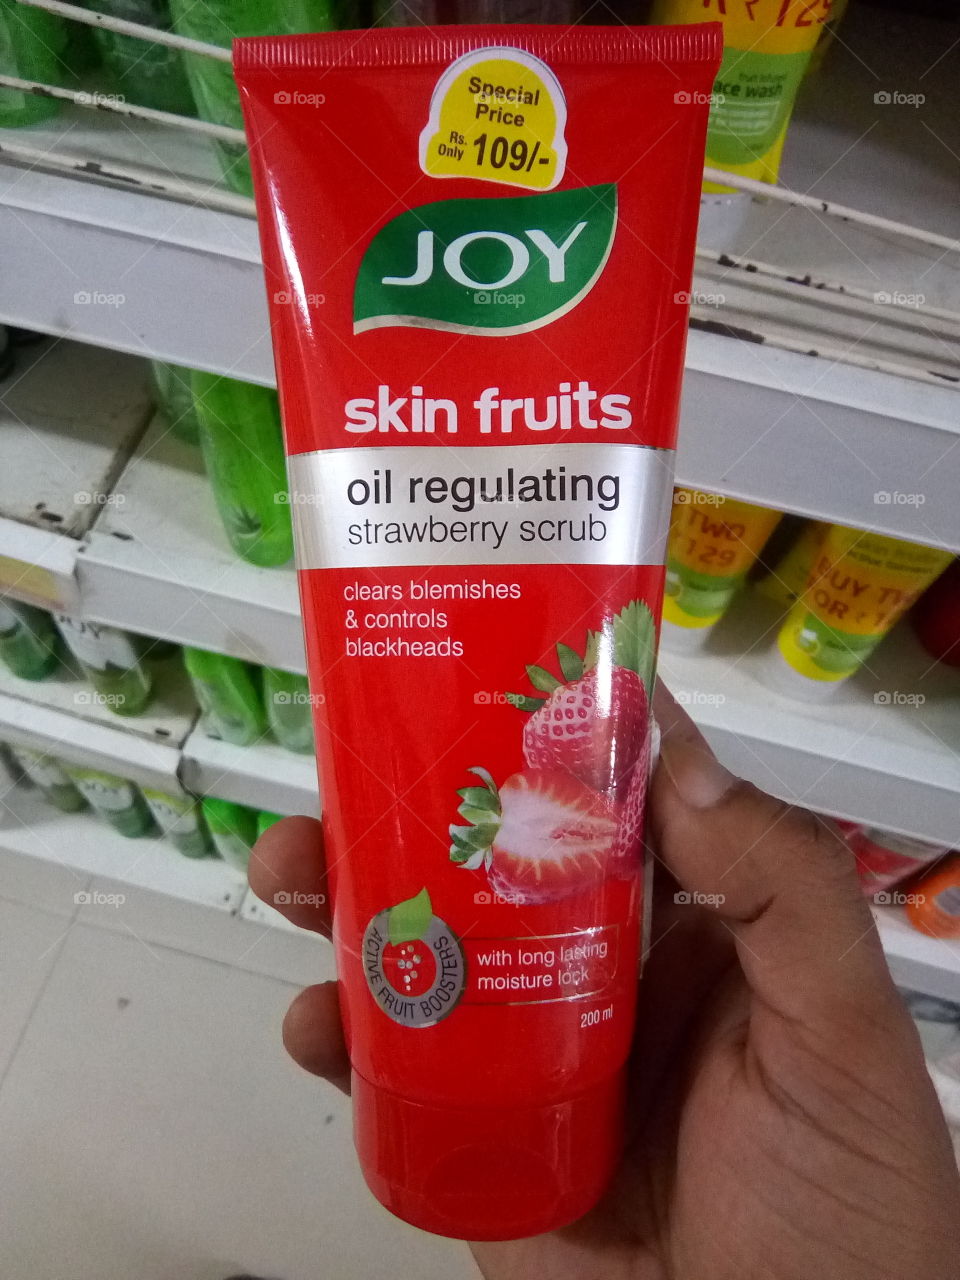 JOY skin fruits oil regulating strawberry scrub.